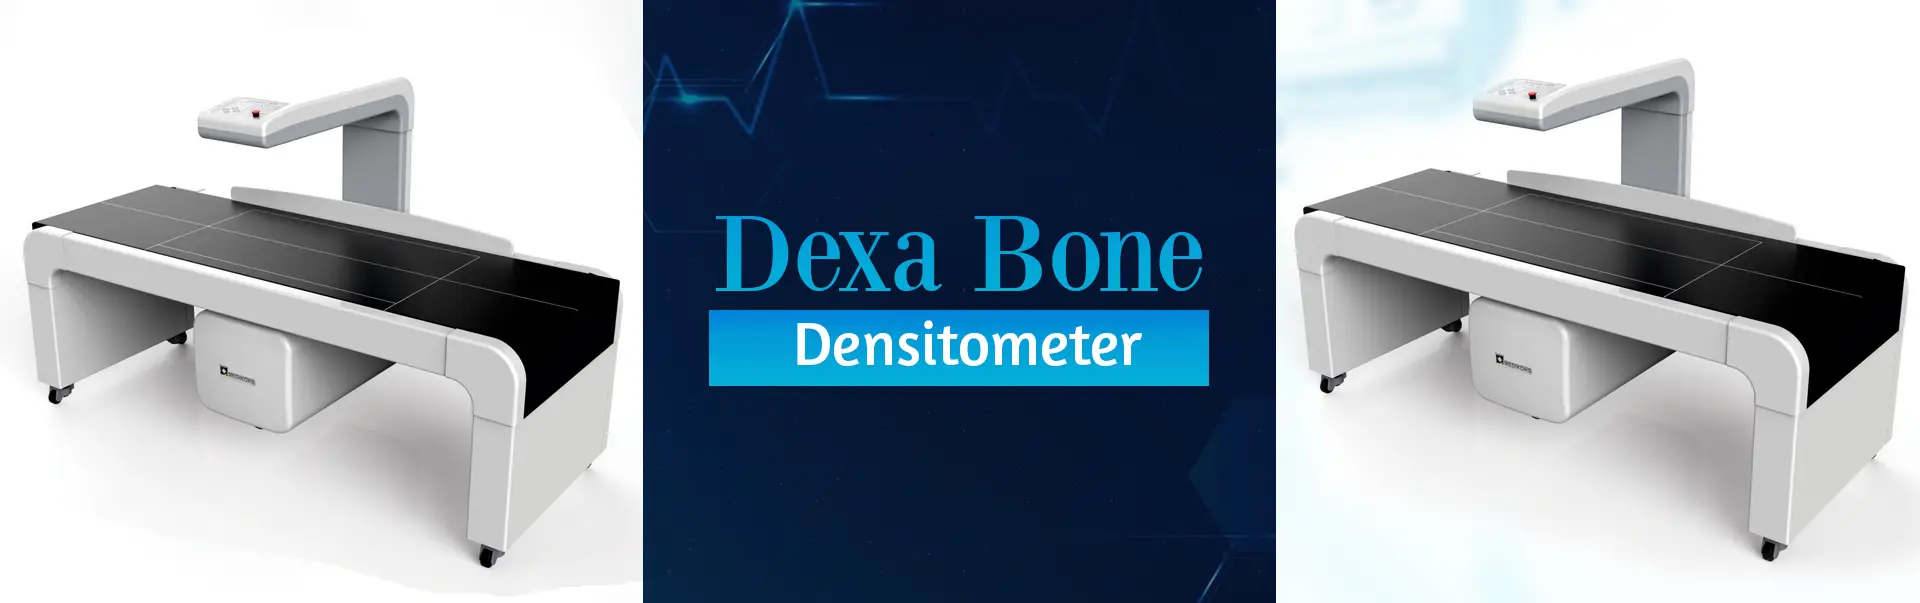 Dexa Bone Densitometer Manufacturers in Chandigarh